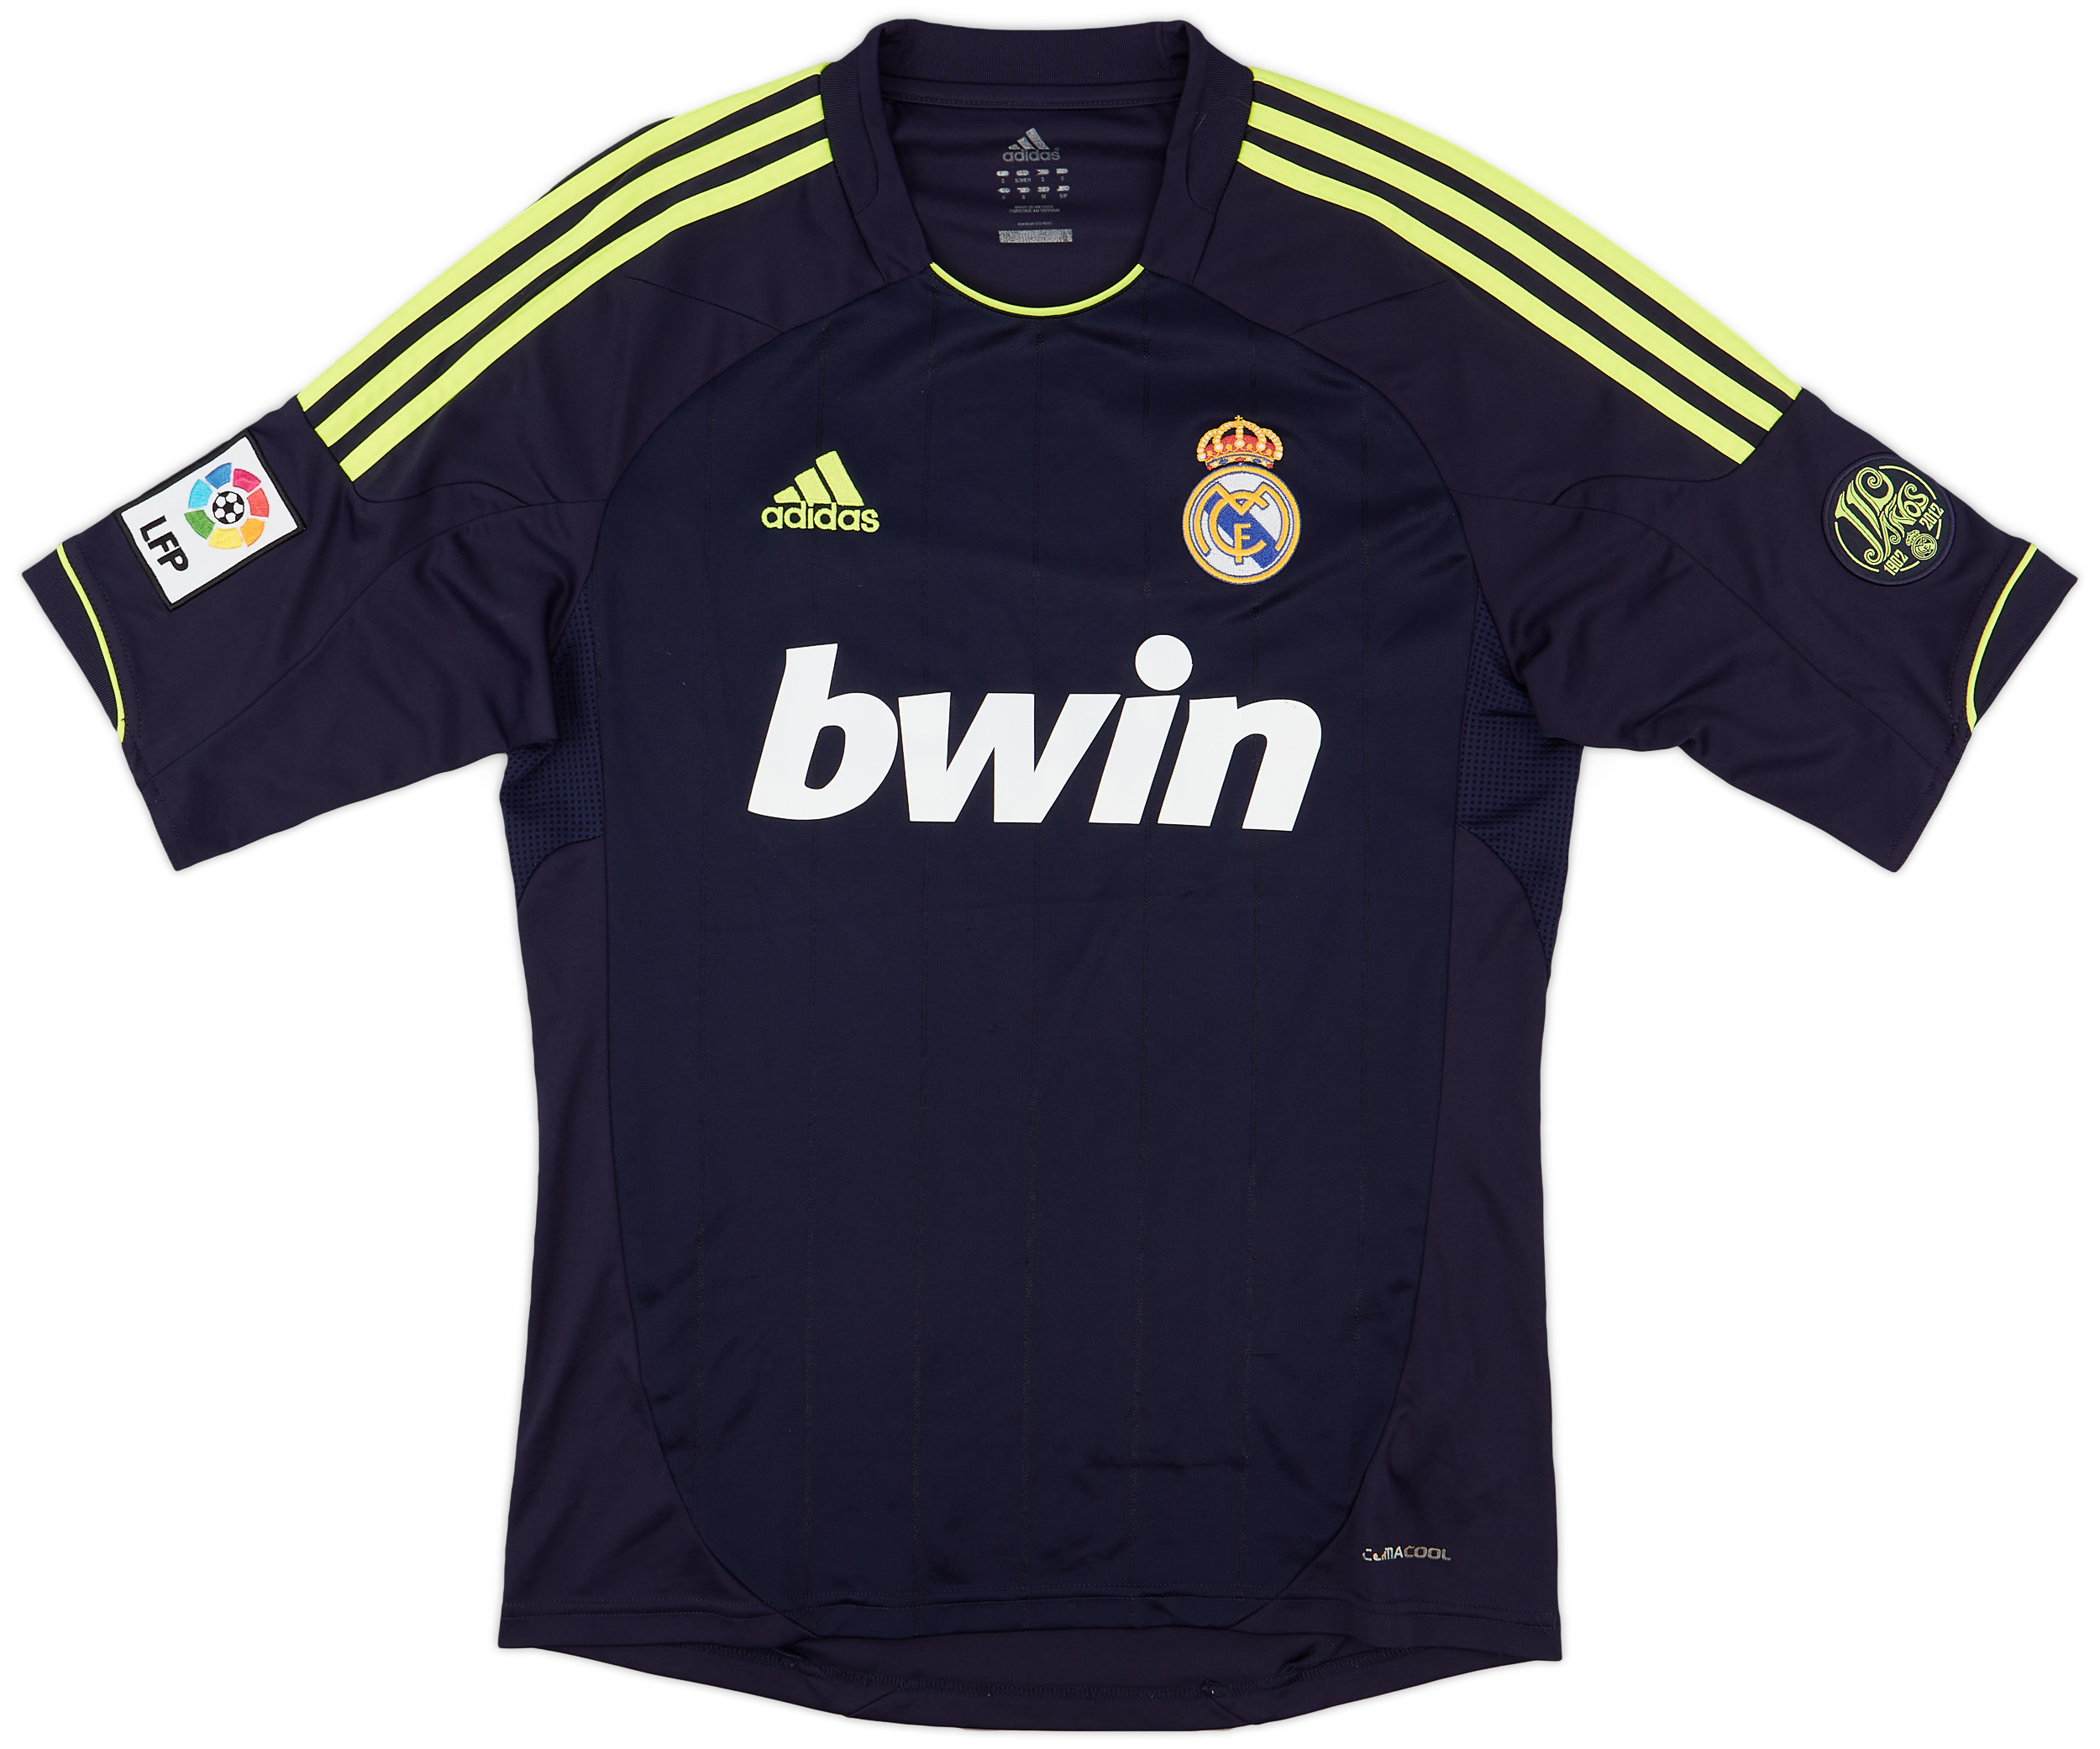 2012-13 Real Madrid Away Shirt - 9/10 - ()